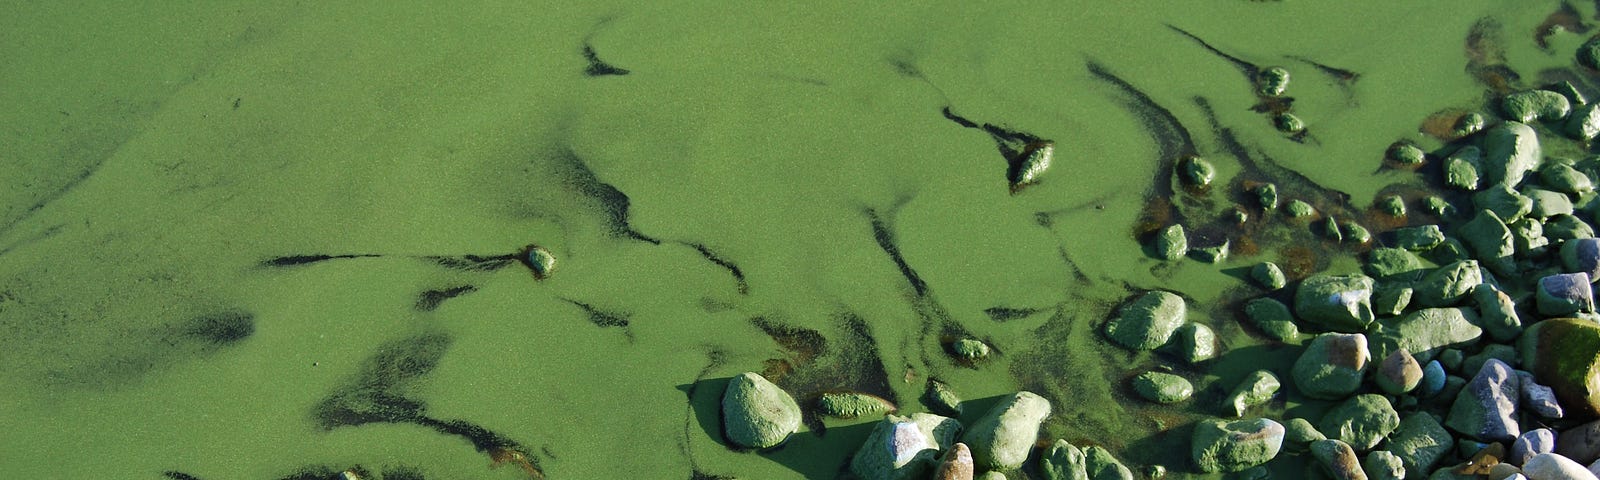 Green algae covering a rocky shoreline.